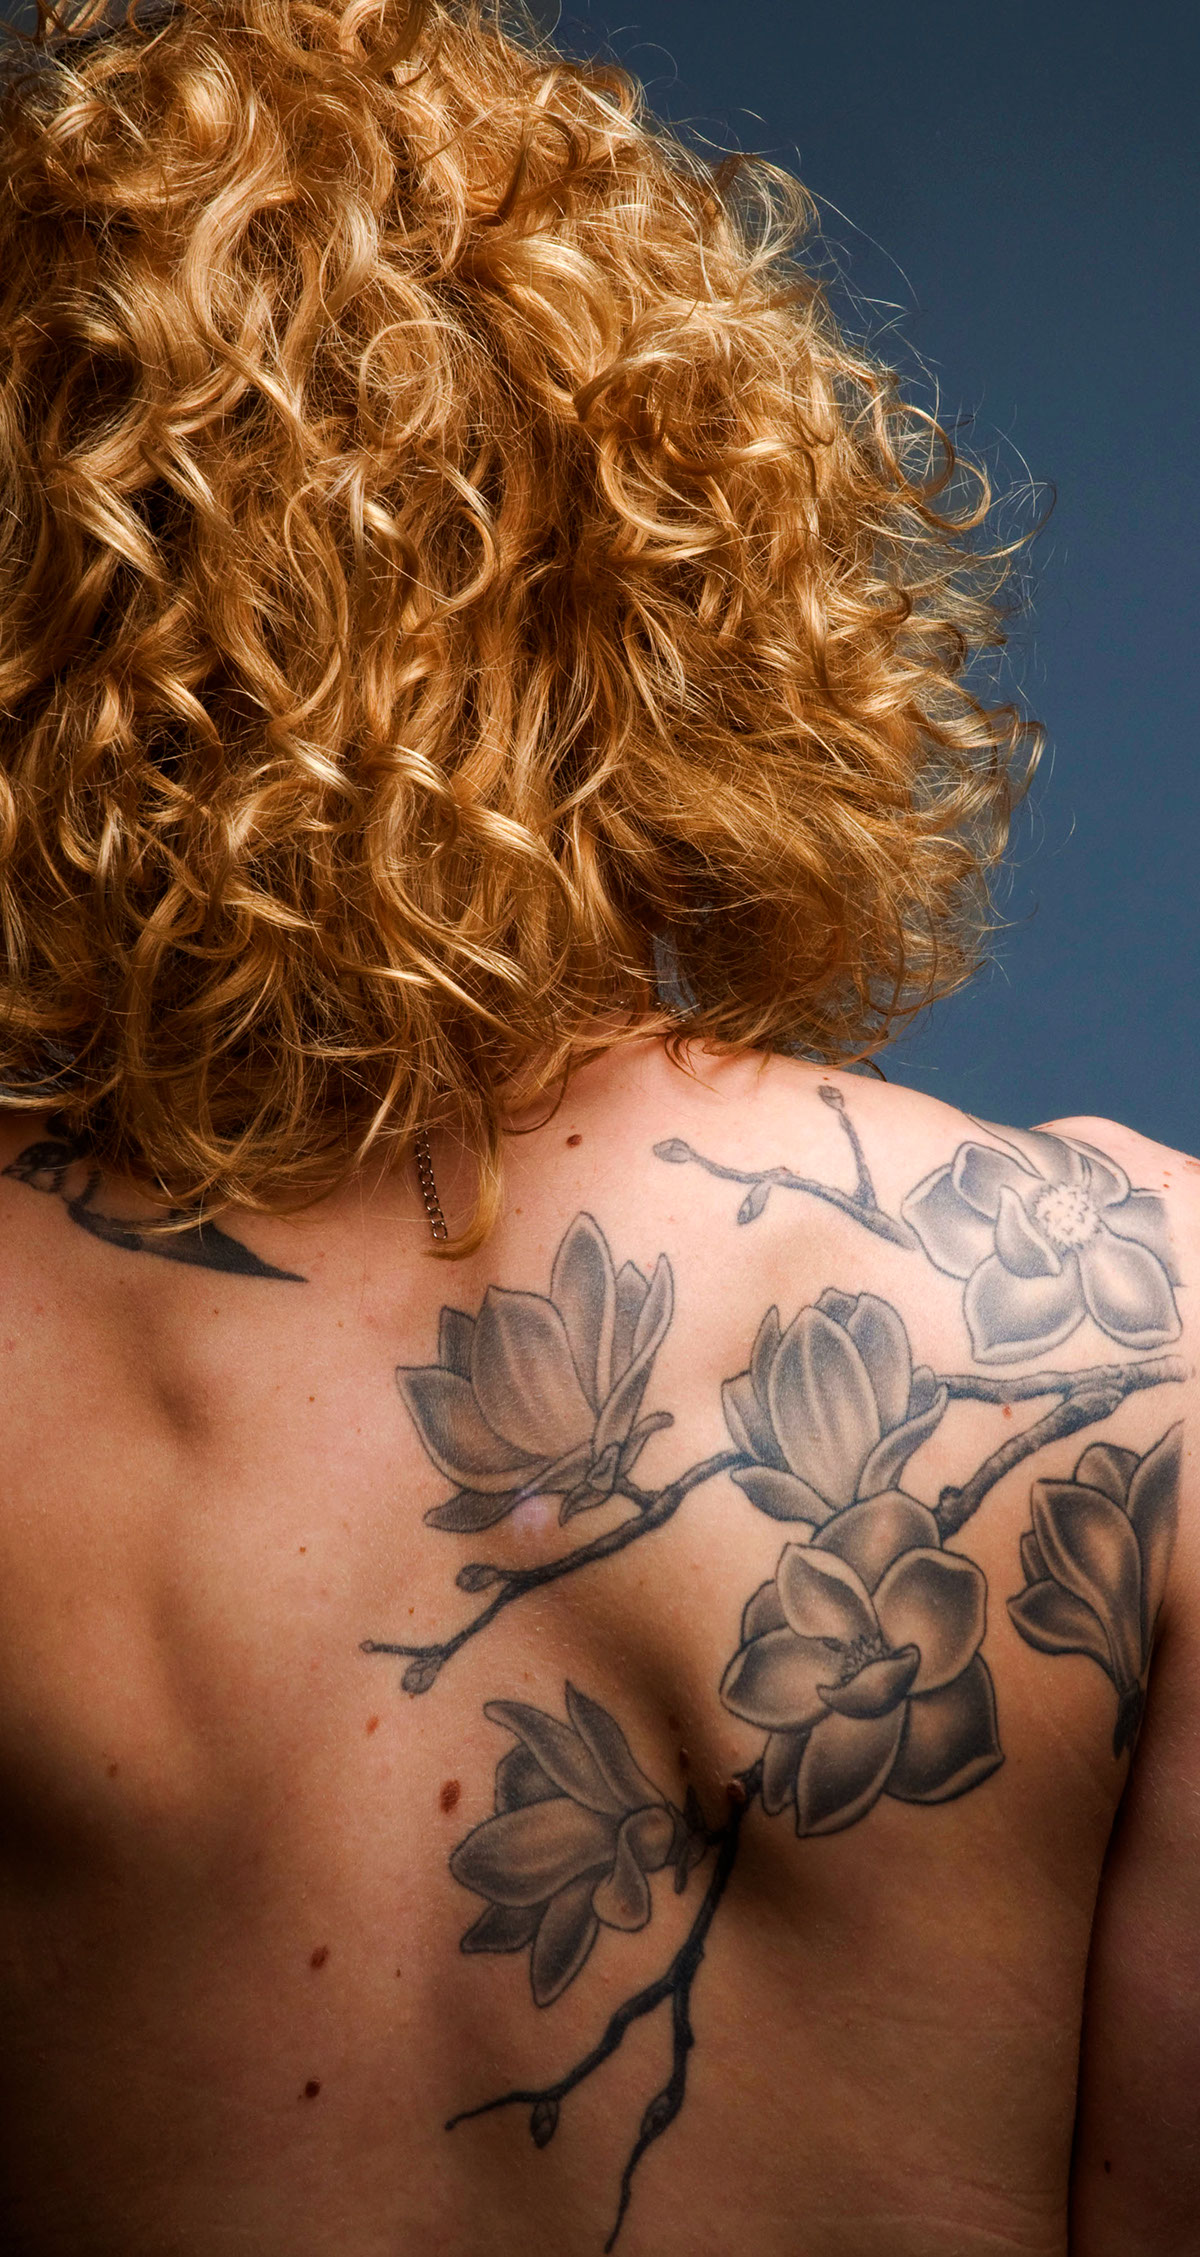 piercing tattoo tatouage bod mods modification corporelle